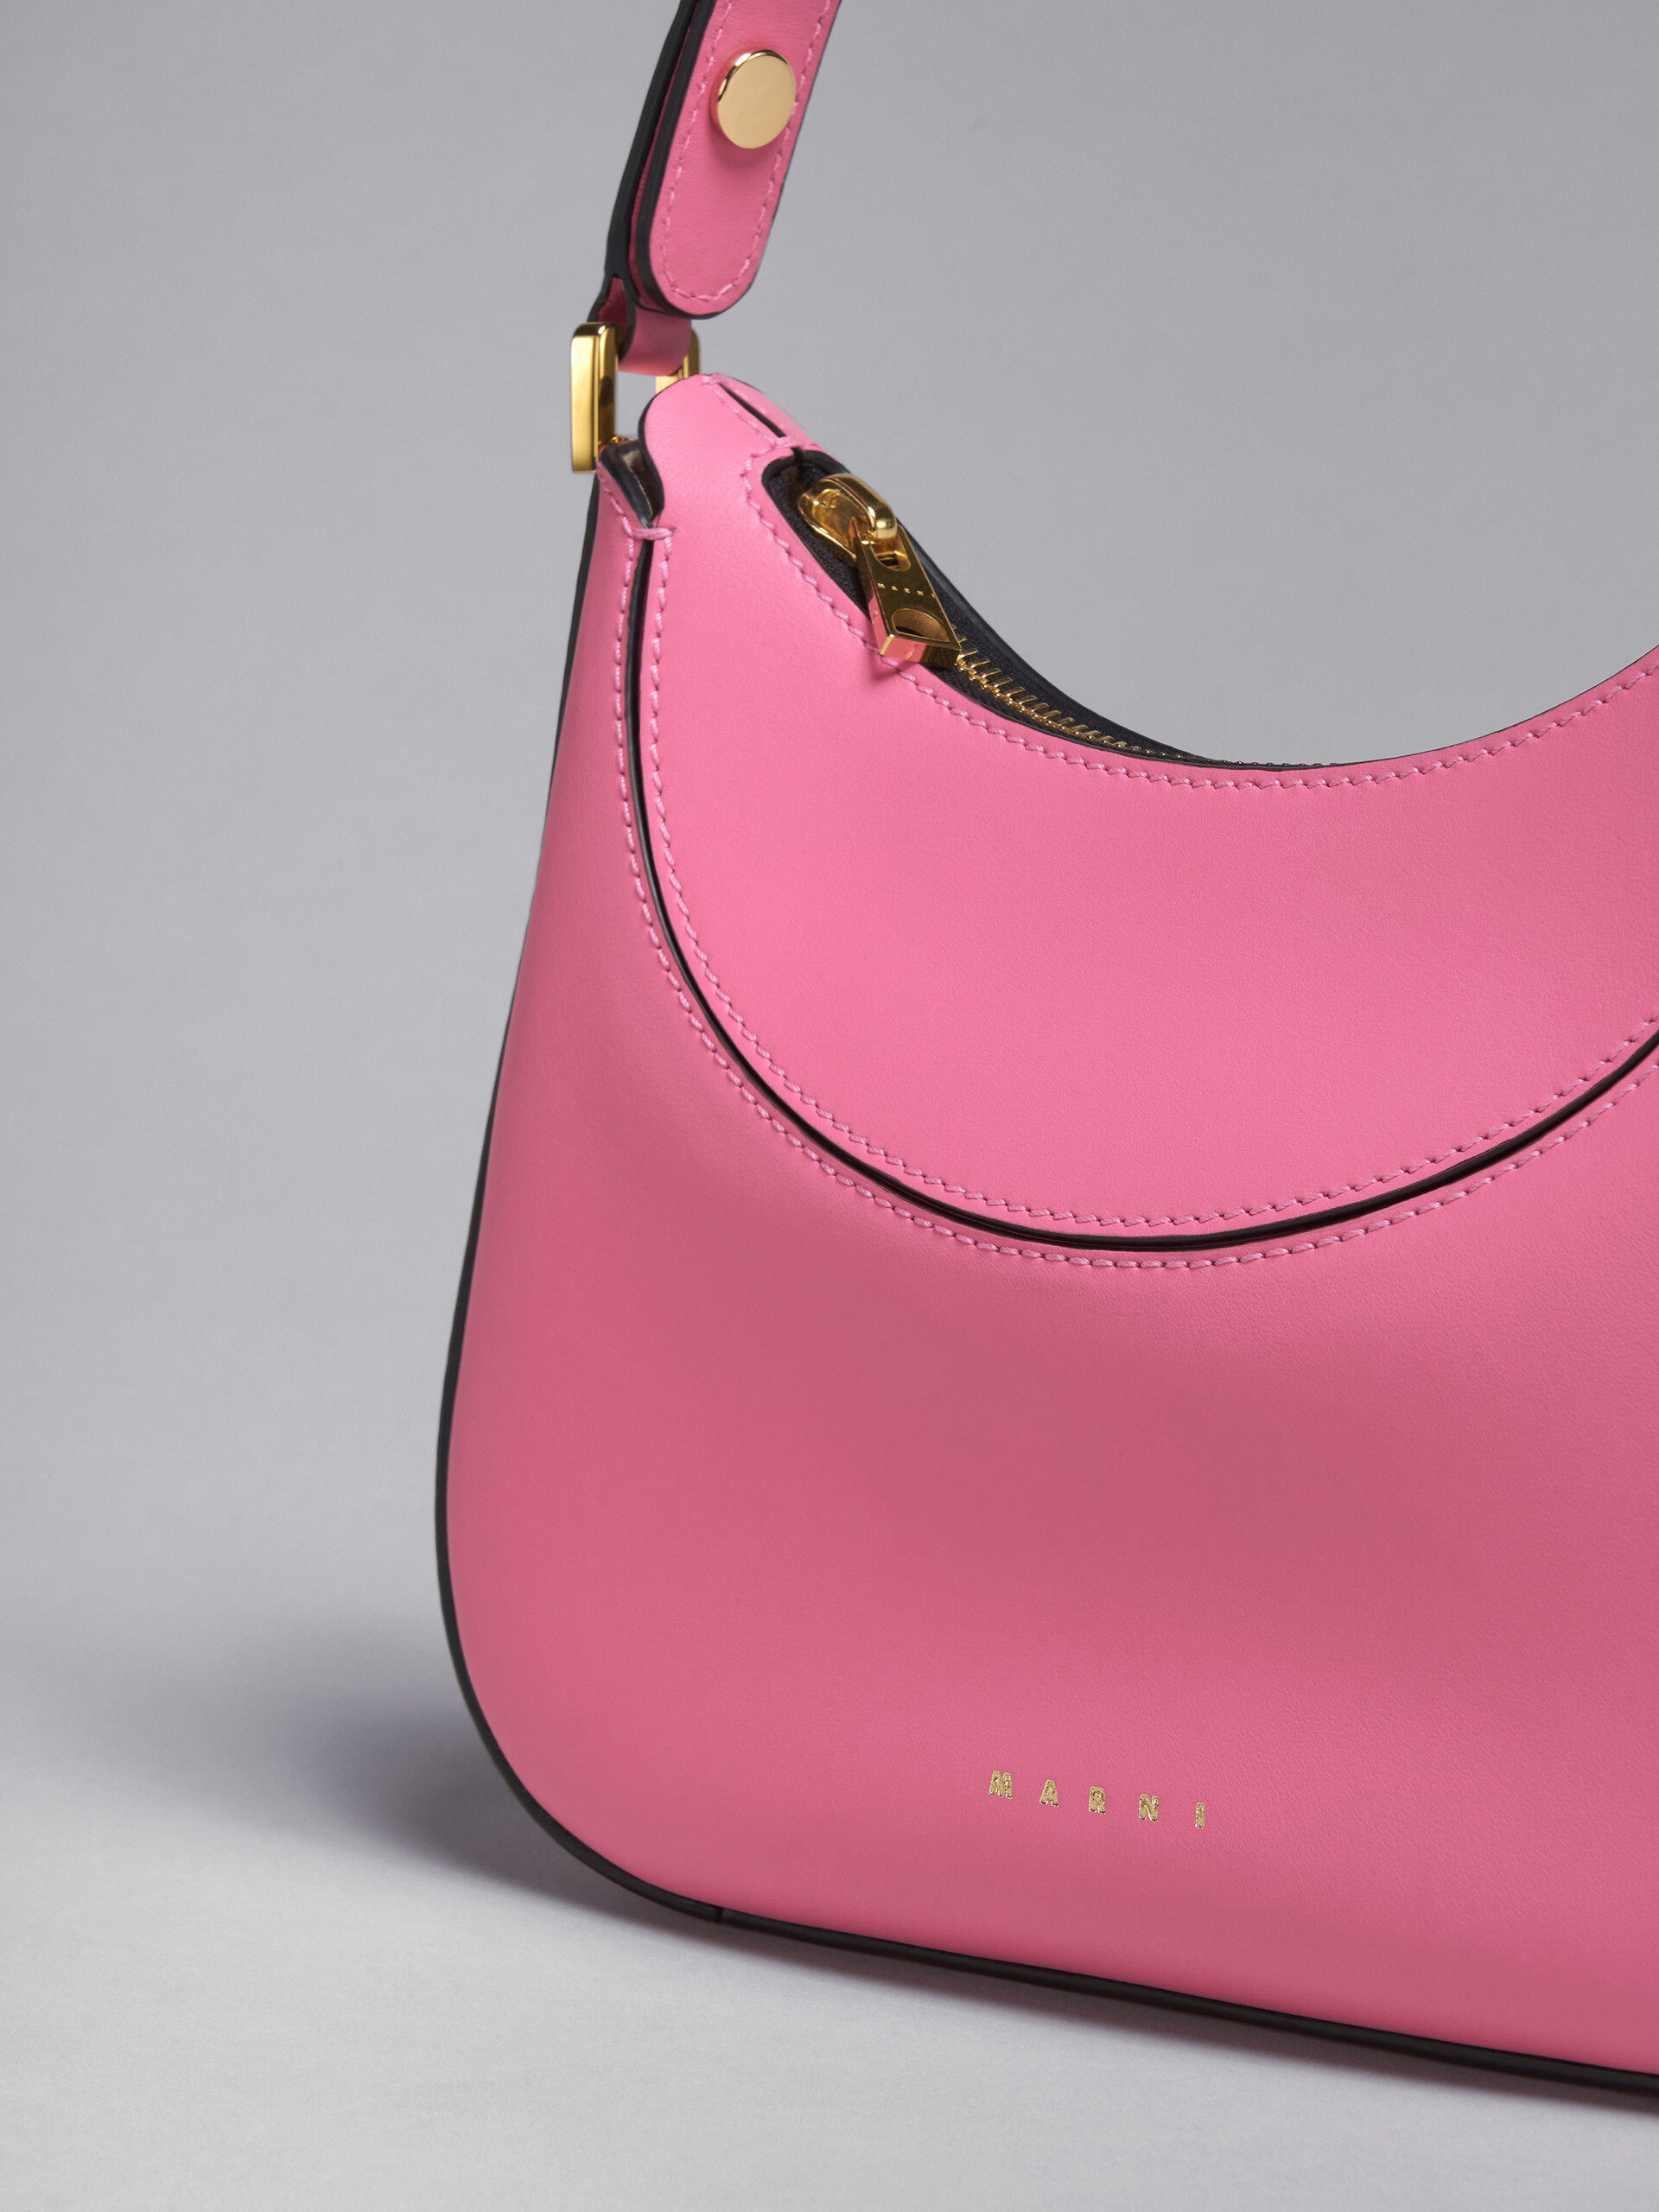 Milano mini bag in pink leather - Handbags - Image 5